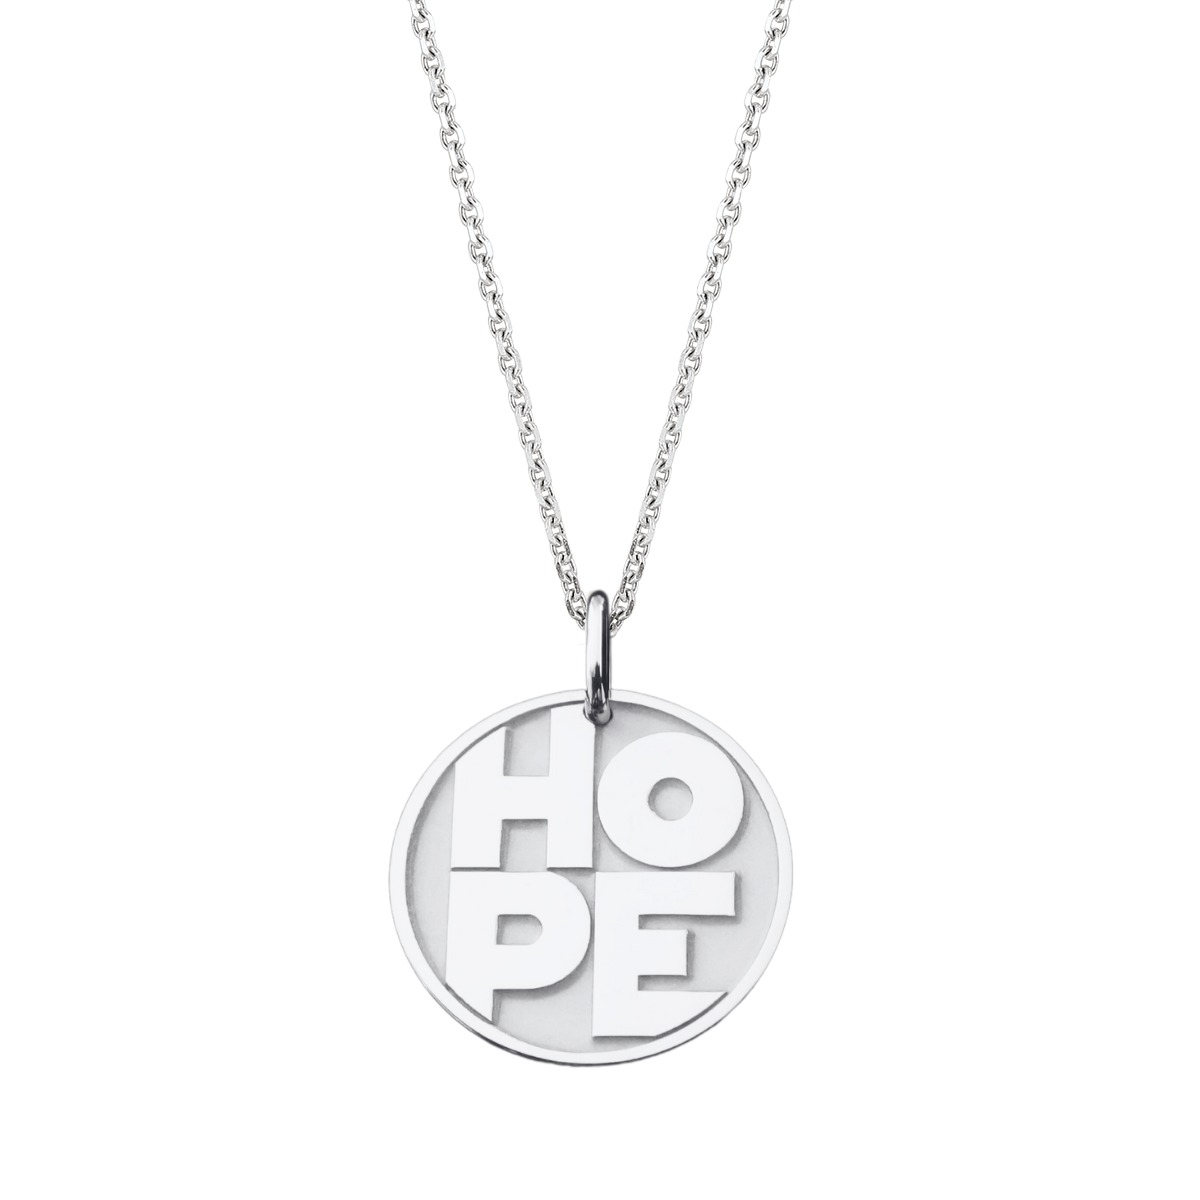 pendentif medaille hope, espoir or blanc 18 carats